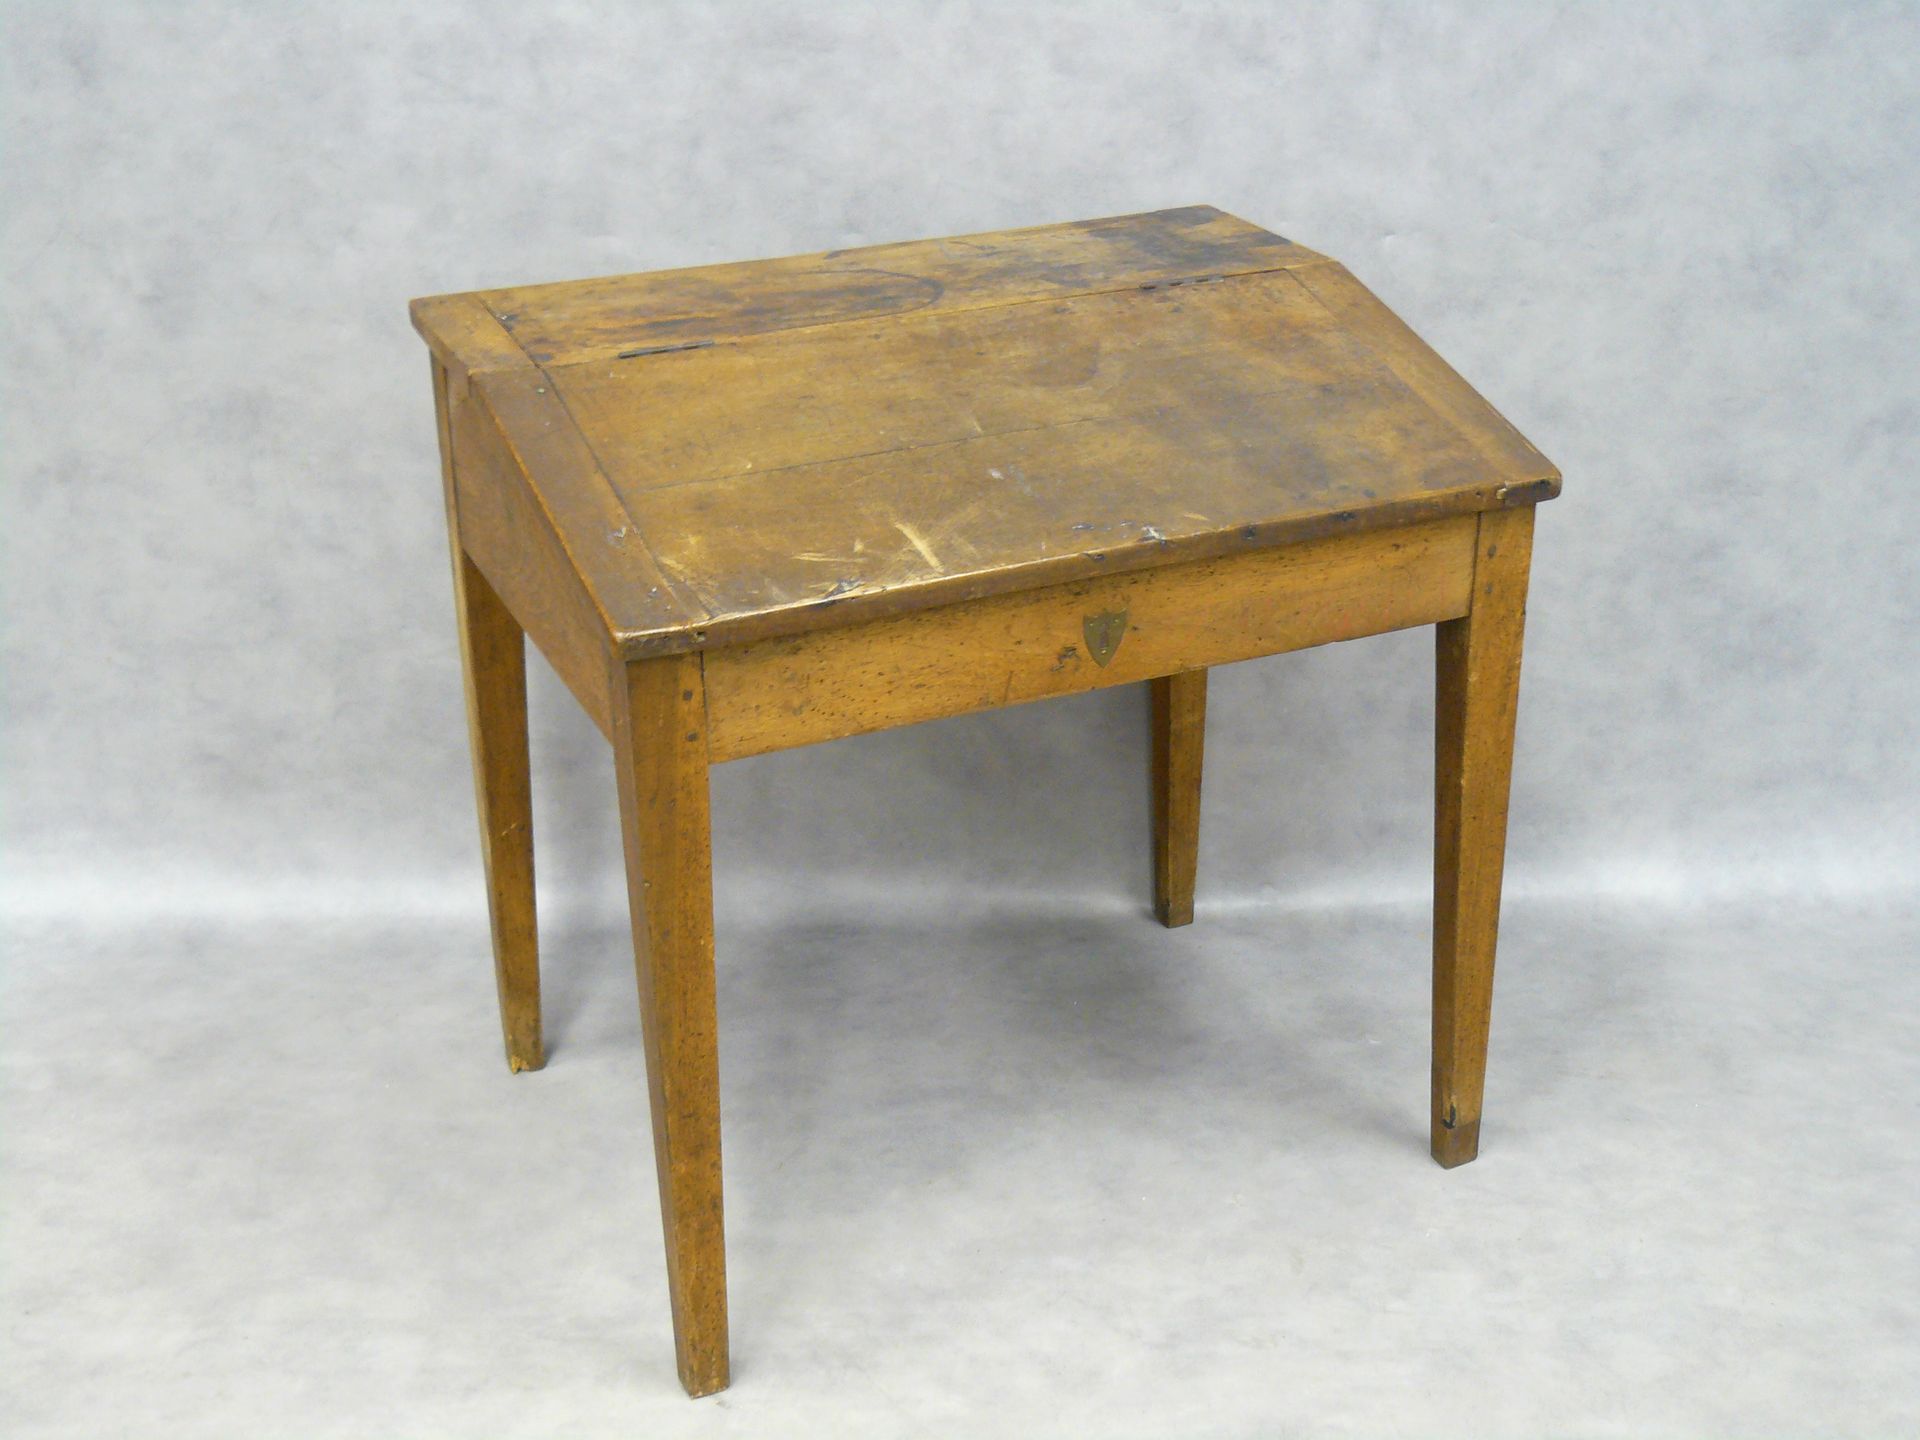 Null a sloping school desk in walnut - 81 x 82 - 61 cm